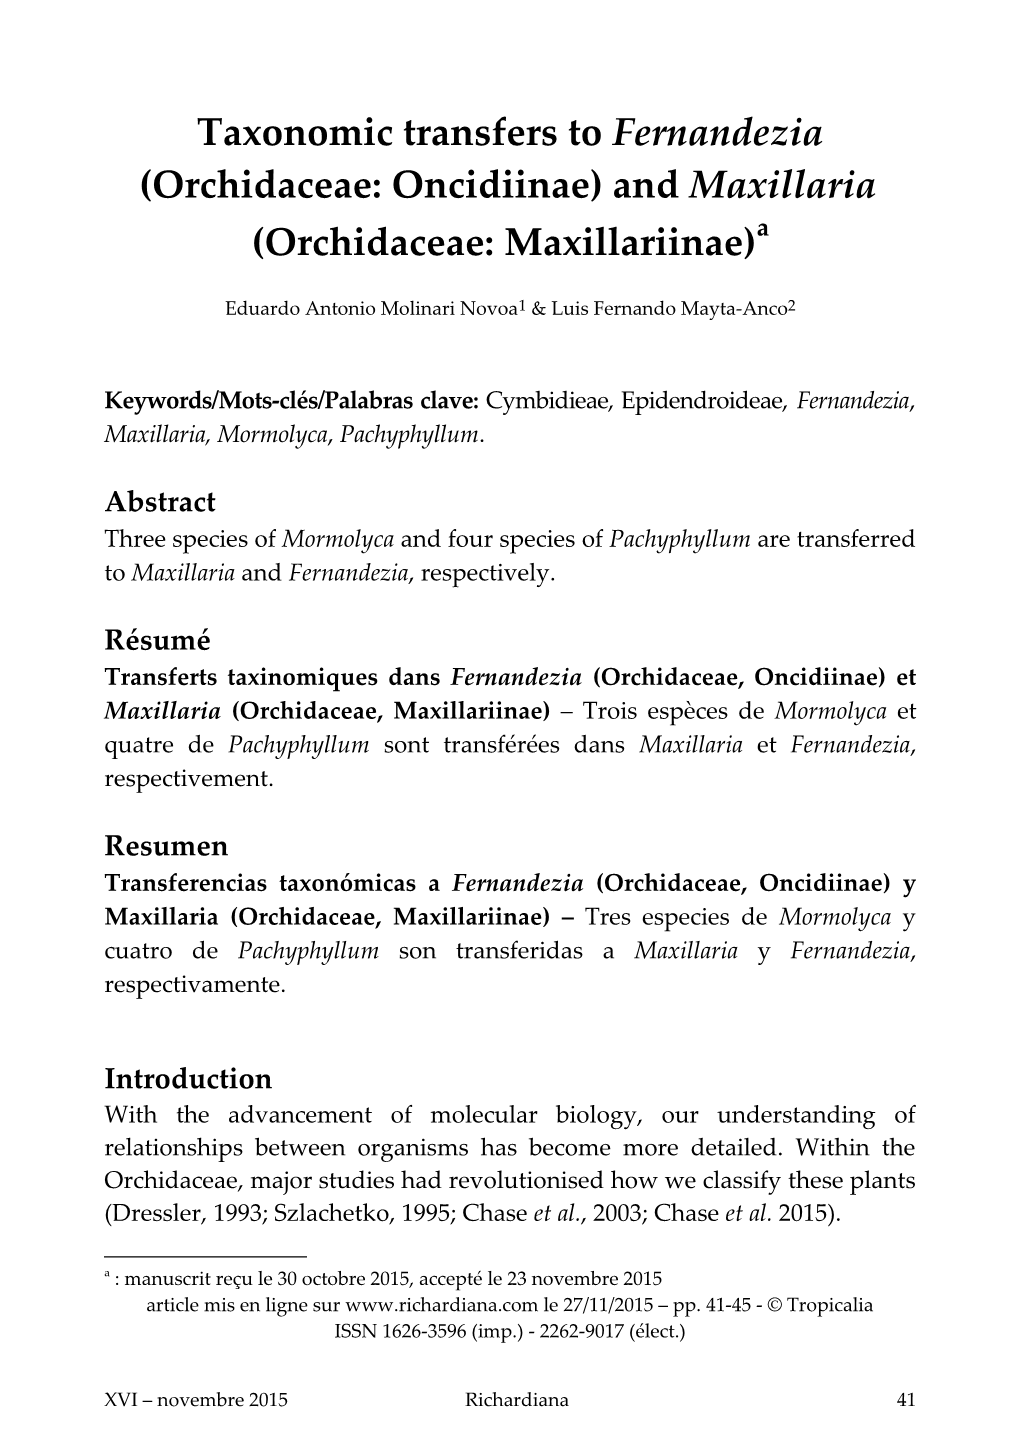 Taxonomic Transfers to Fernandezia (Orchidaceae: Oncidiinae) and Maxillaria (Orchidaceae: Maxillariinae)A